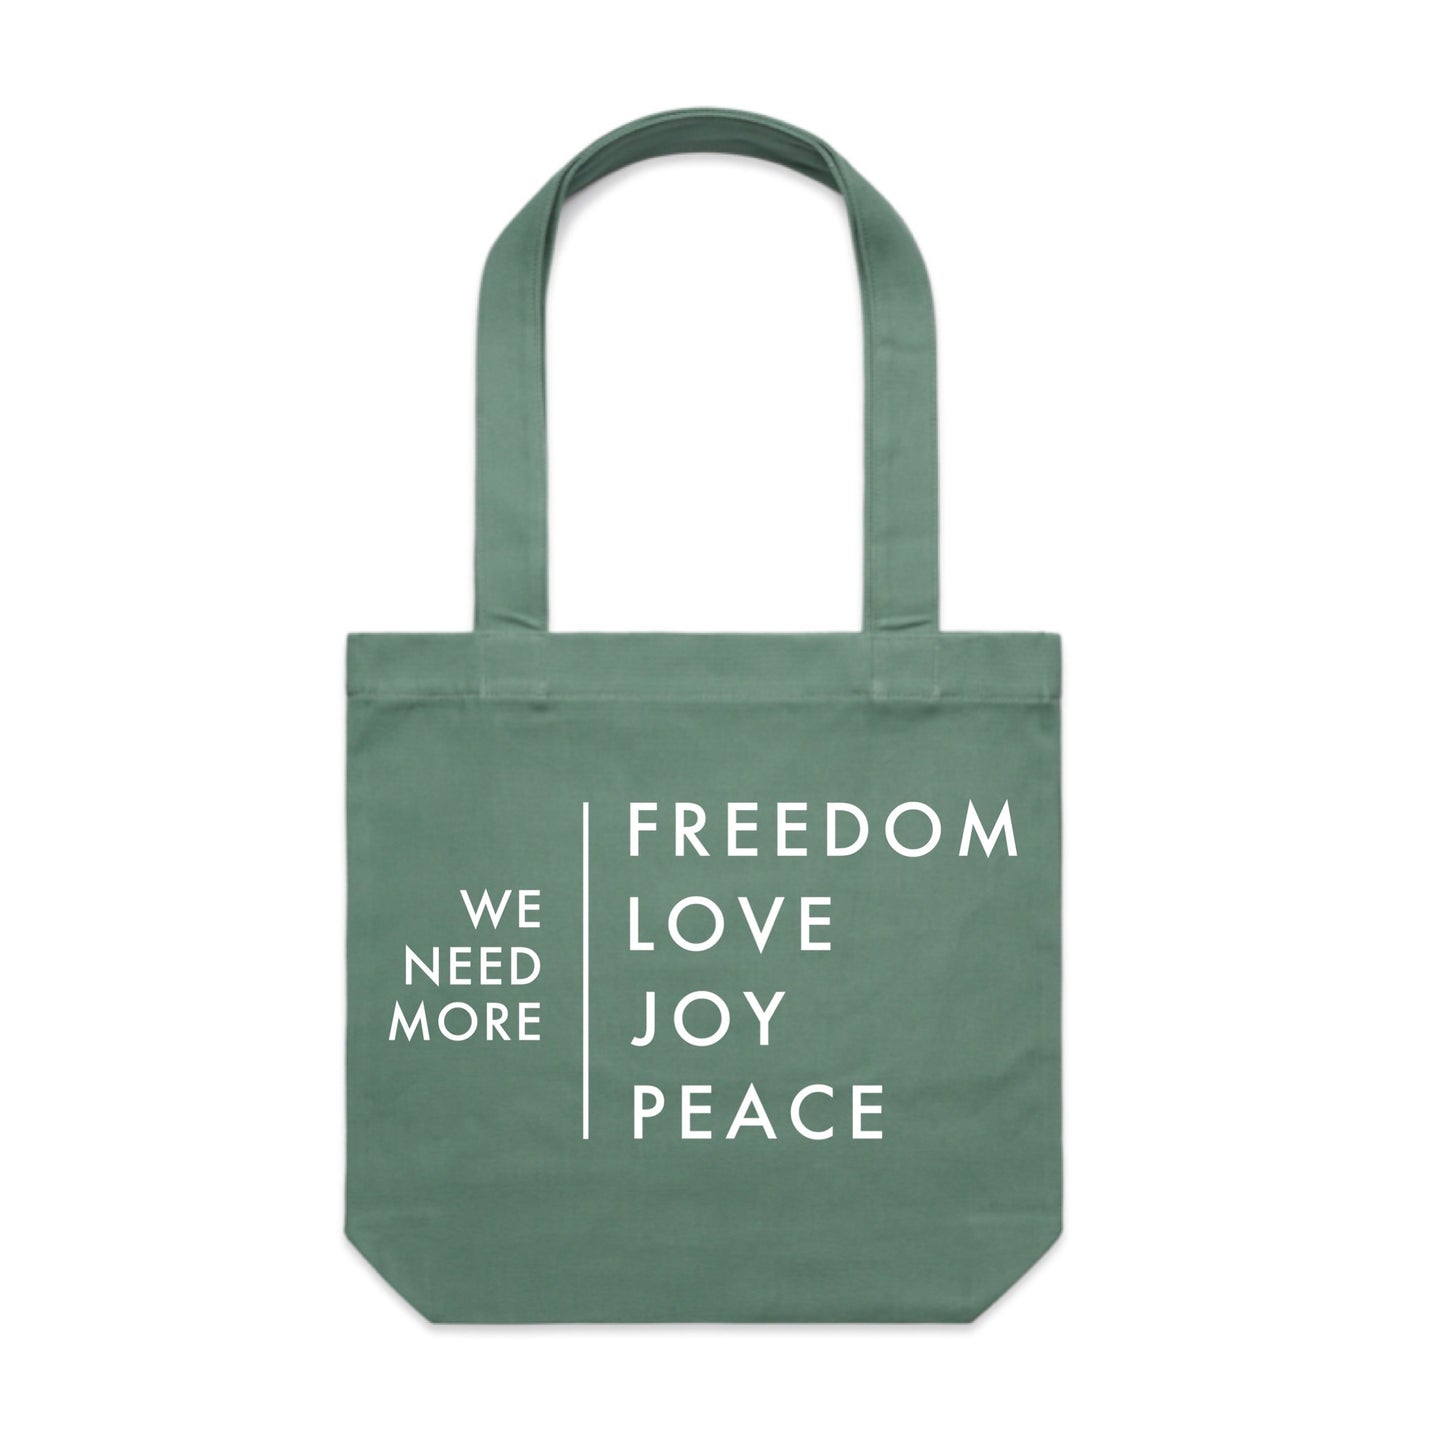 Silverroom | We Need More Freedom, Love, Joy, Peace Tote